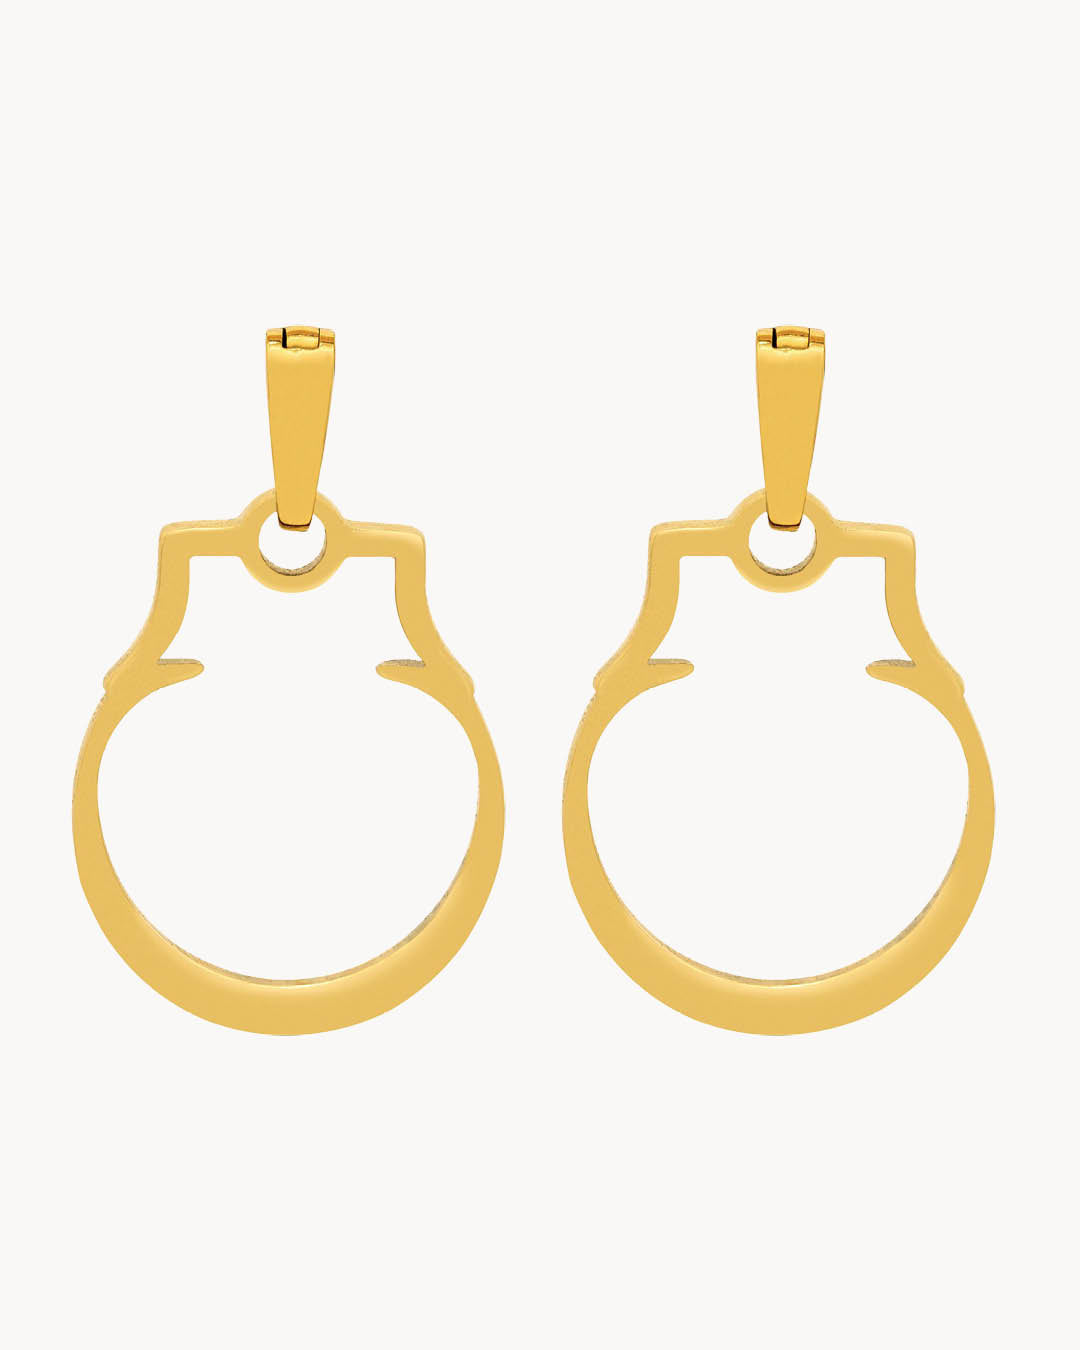 Classic Ħabbata Earring Pendants, Gold